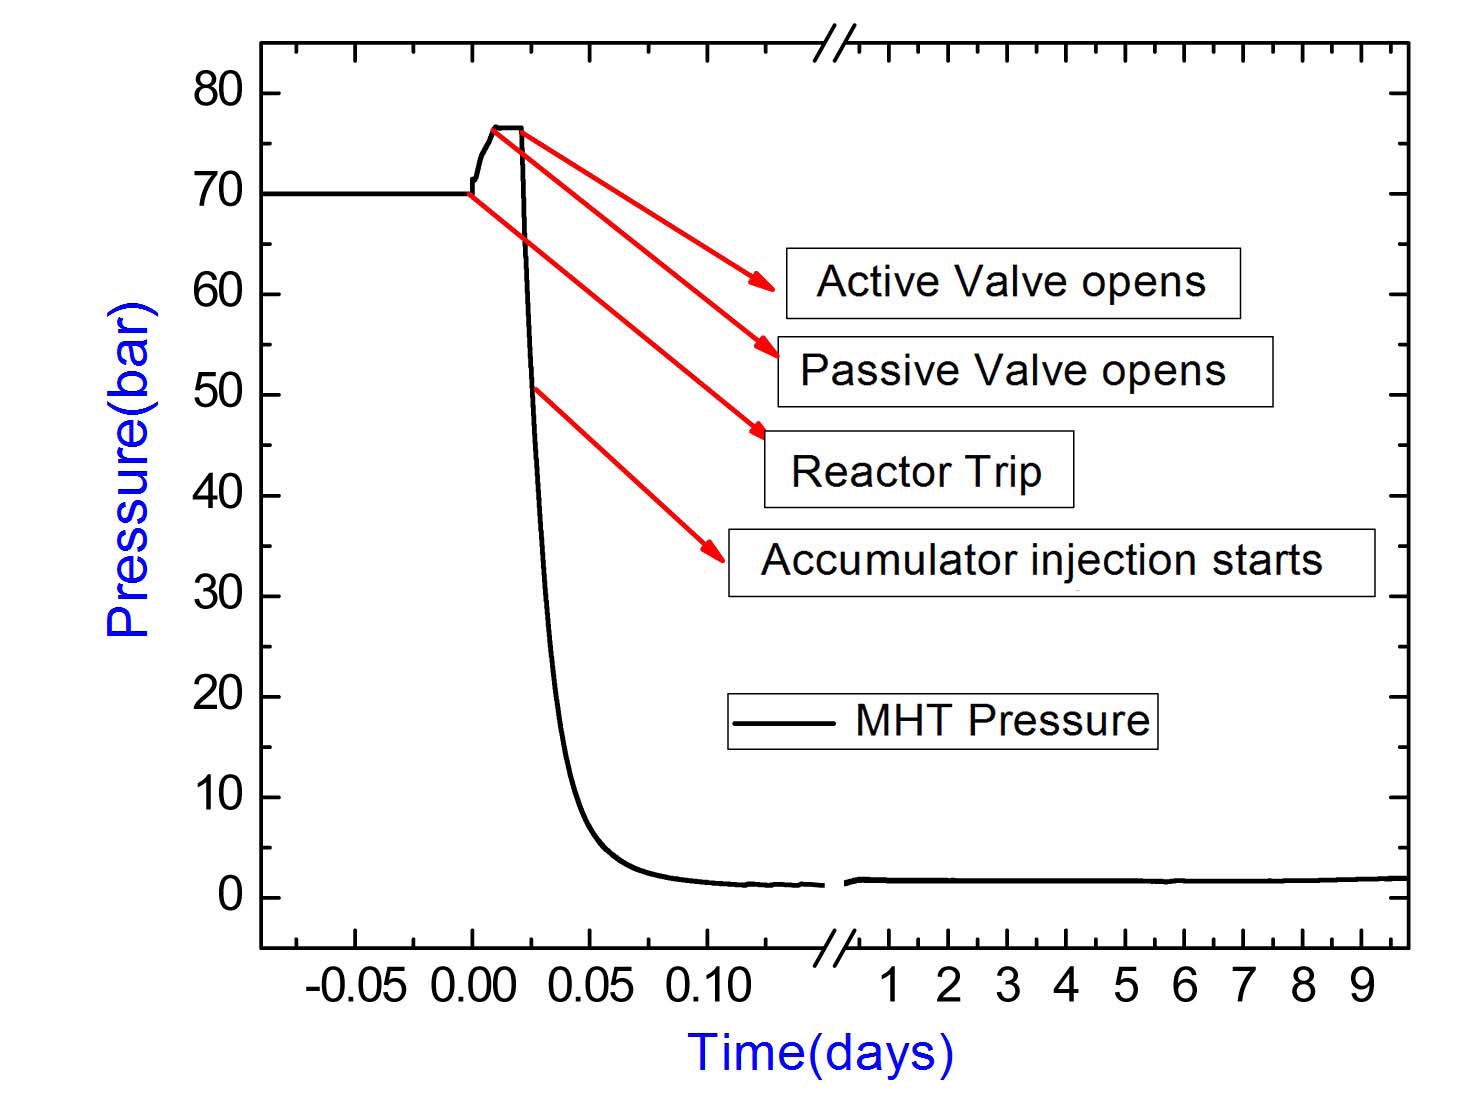 Variation of MHTS Pressure